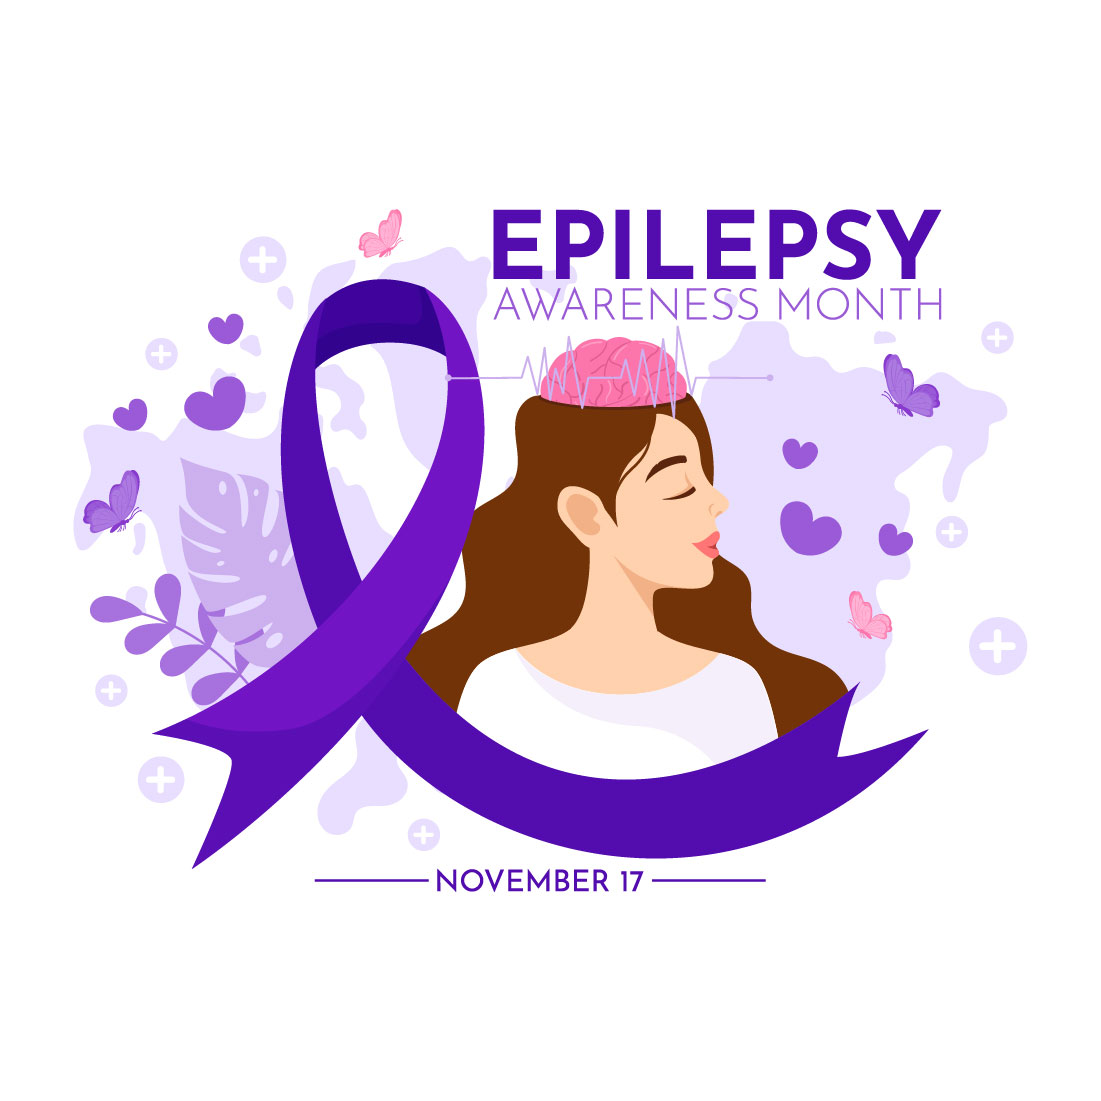 14 Epilepsy Awareness Month Illustration cover image.